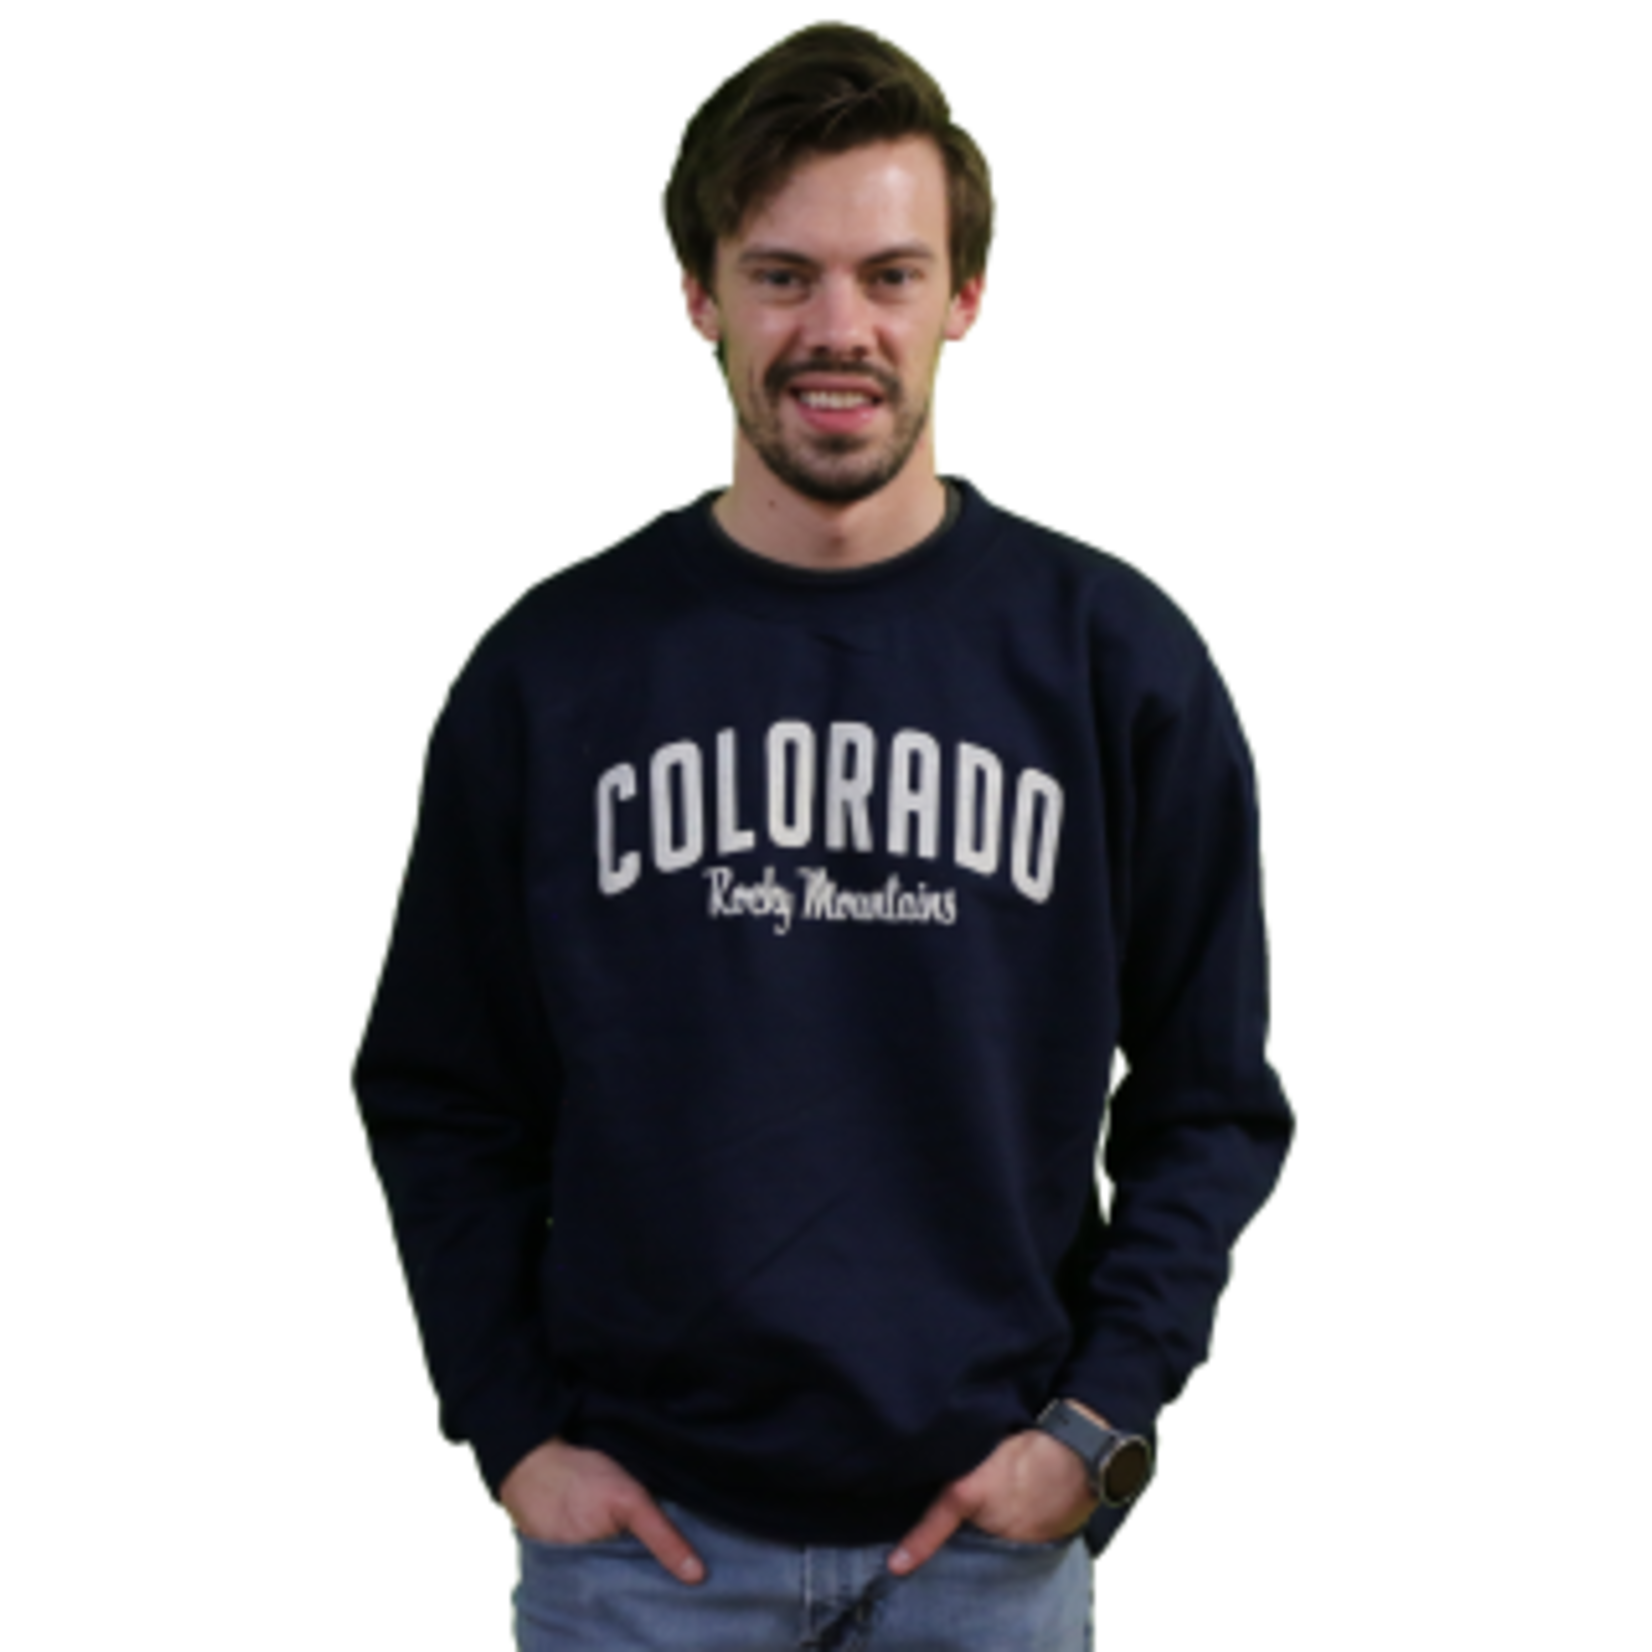 Prairie Mtn Screening Colorado Rocky Mountains Sweatshirt - Lynard Skynard